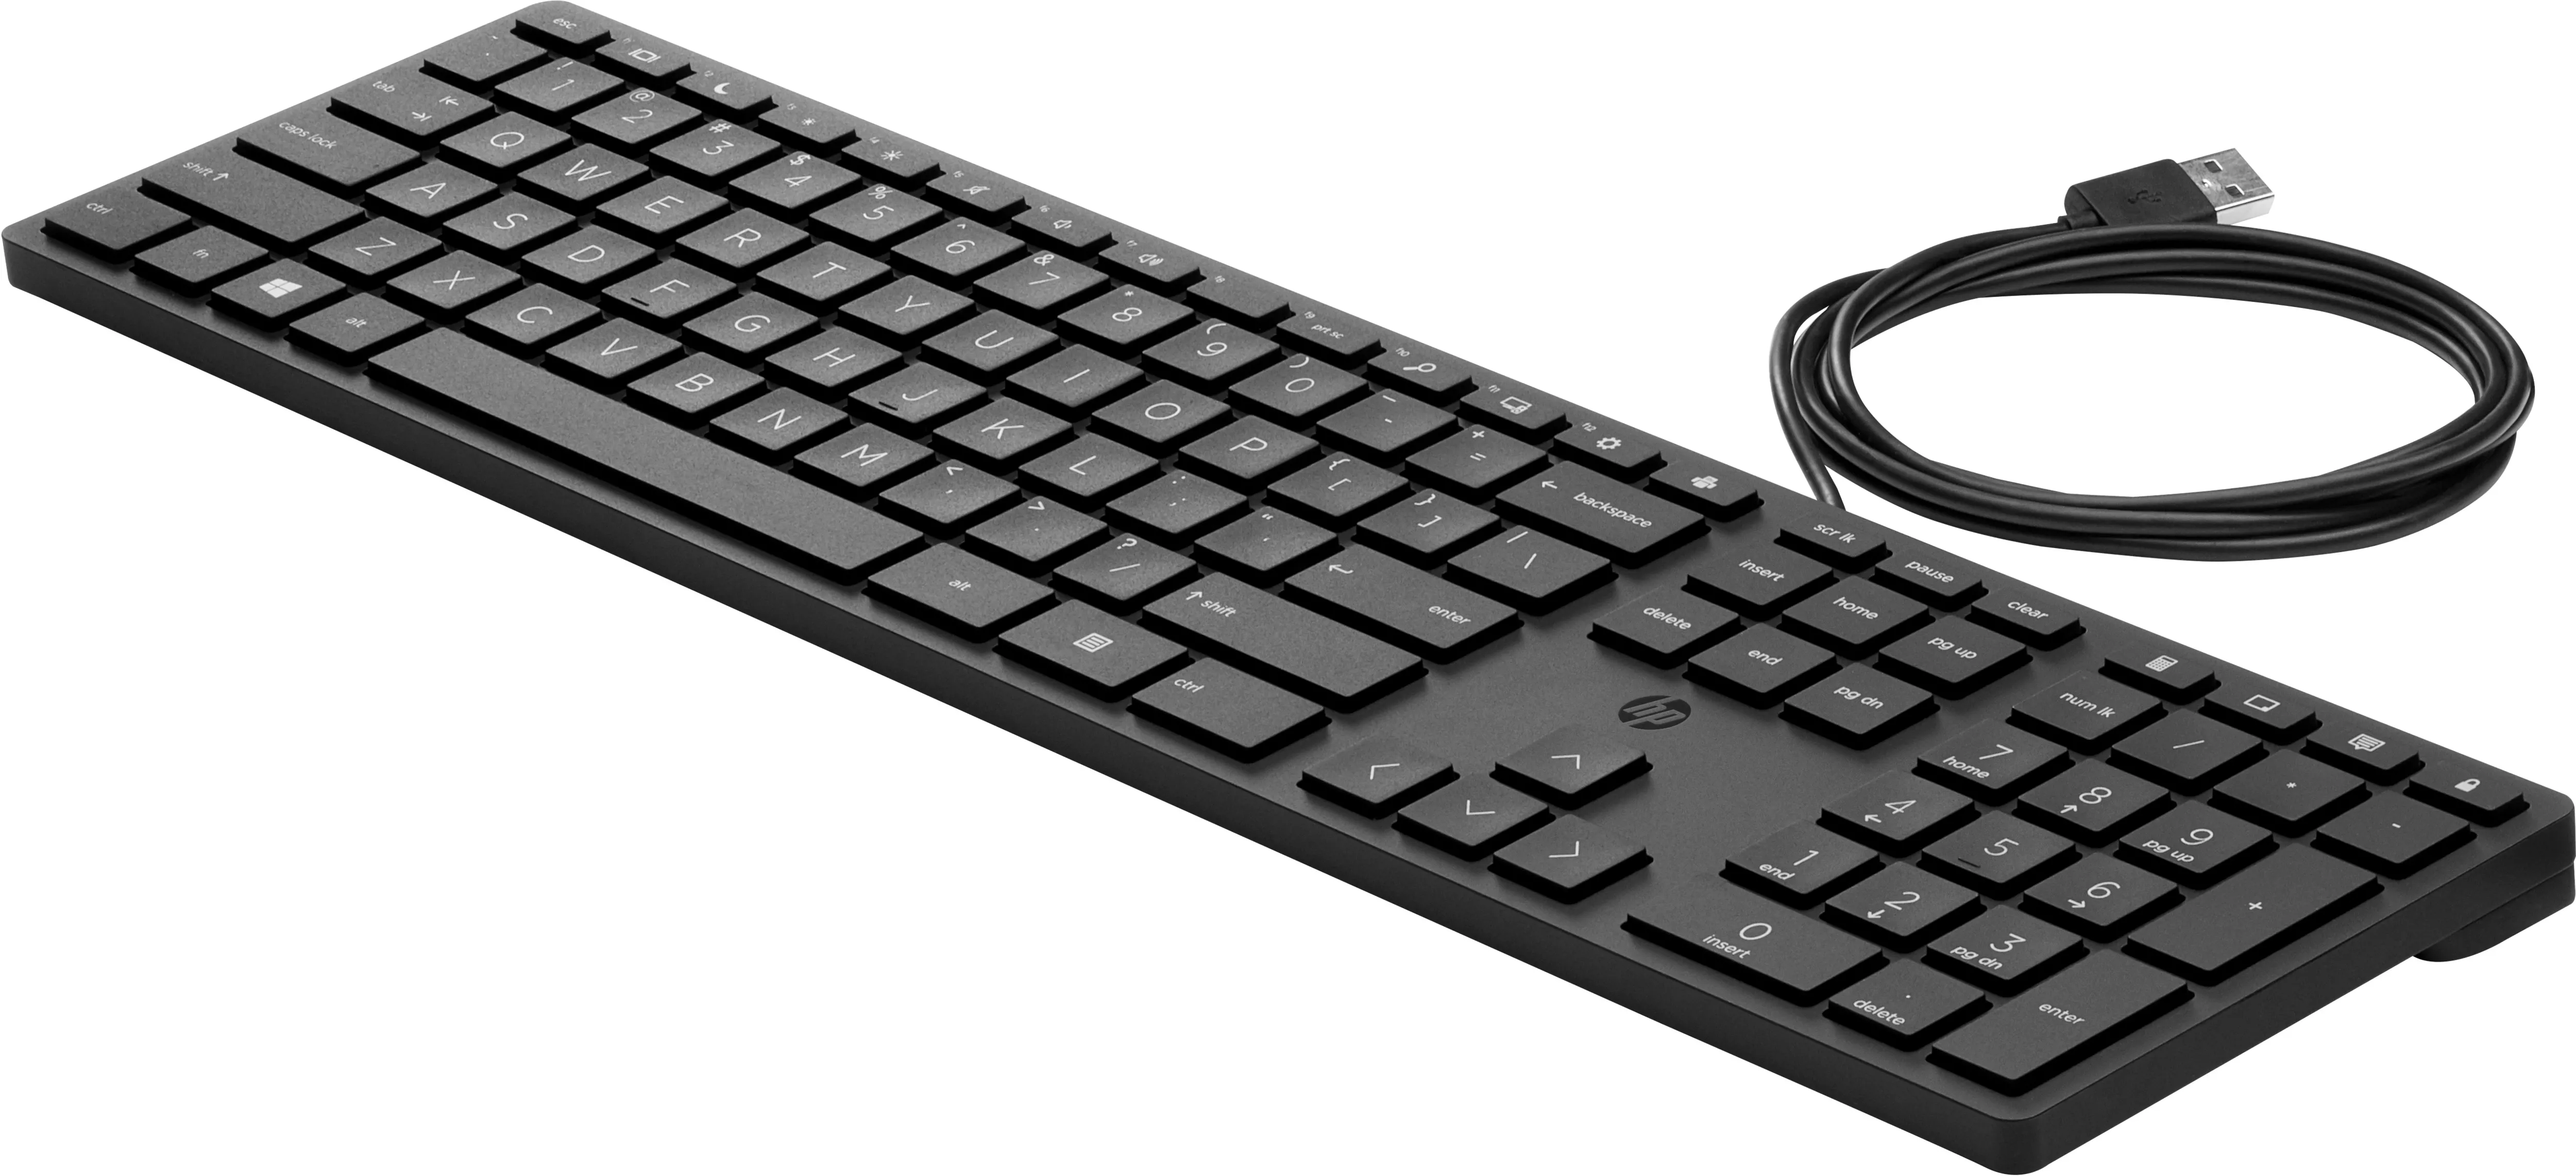 Vente HP Wired Desktop 320K Keyboard (PT au meilleur prix